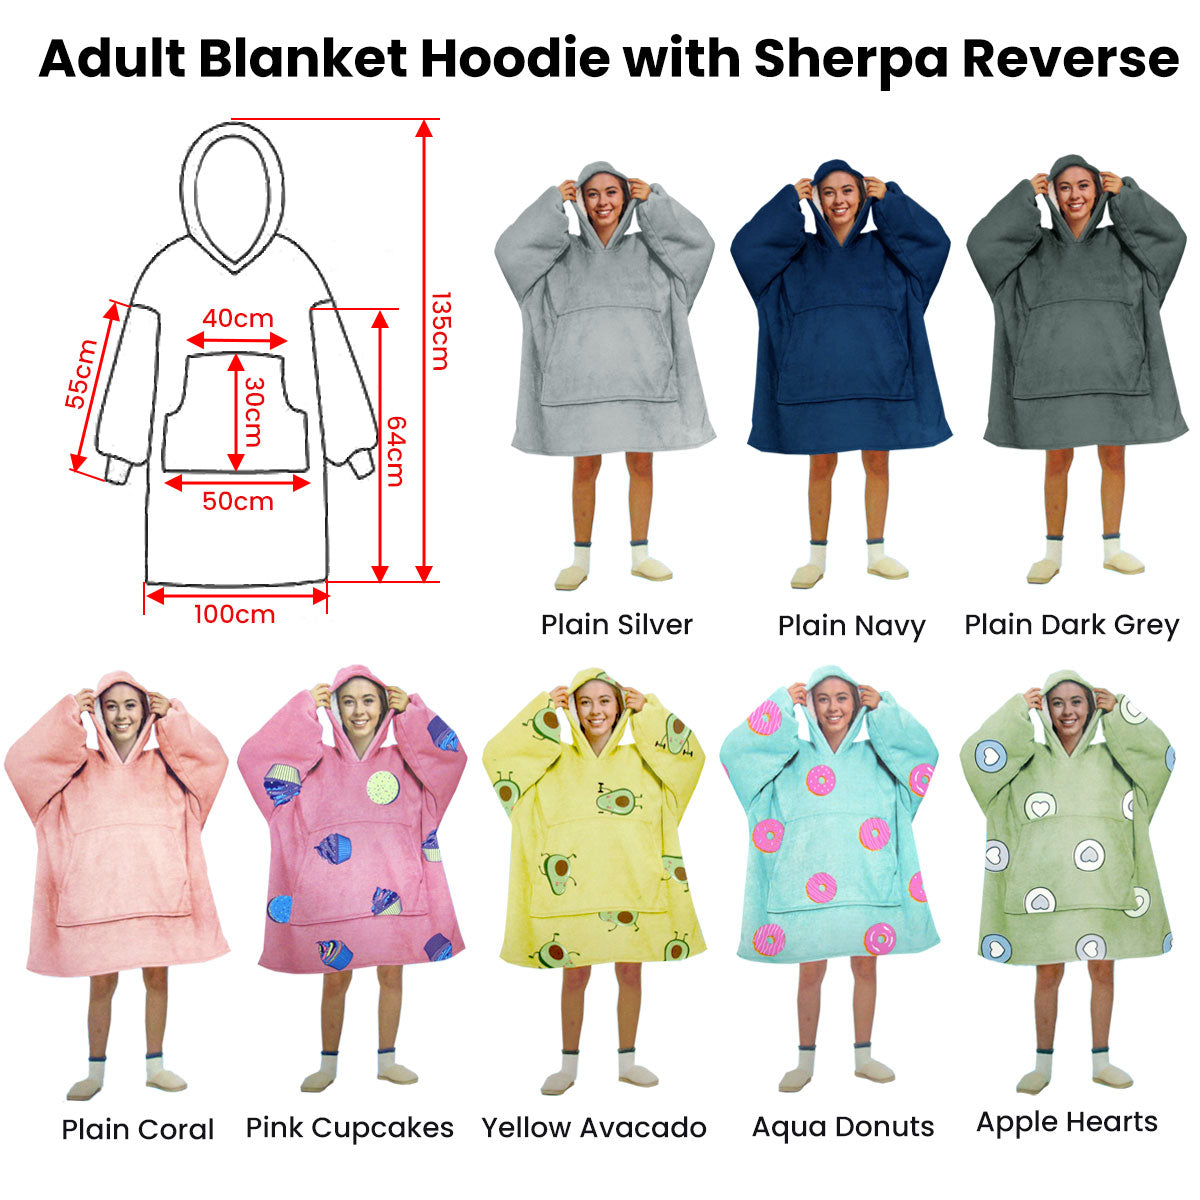 Blanket Hoodie with Sherpa Reverse Yellow Avacado - Newstart Furniture